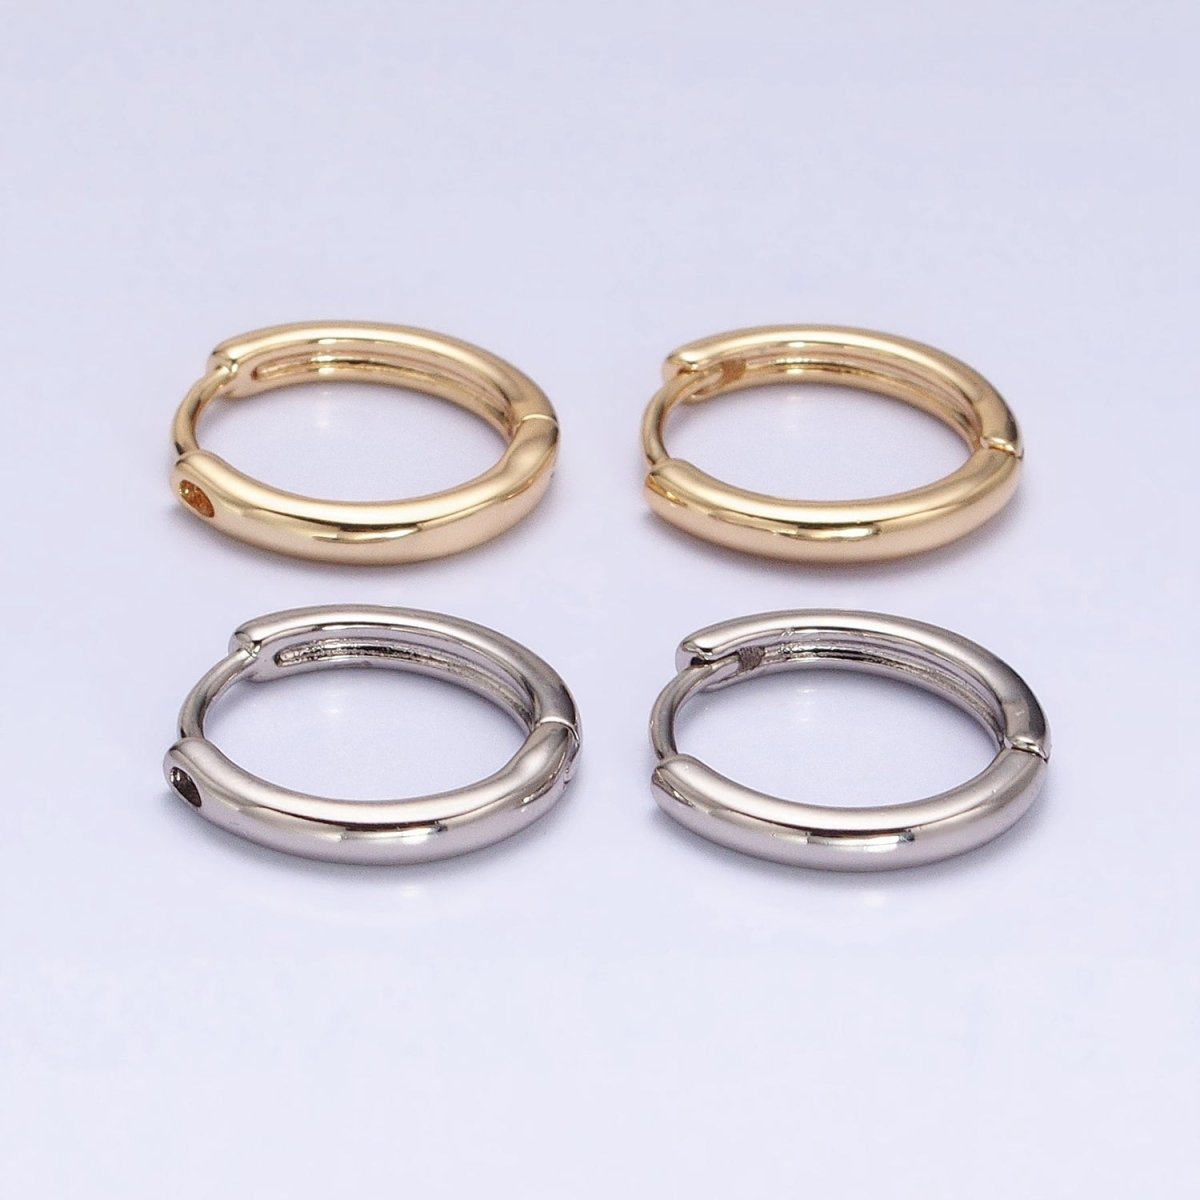 Medium Hoop Earrings in Gold Filled Dainty Gold Hoops Minimalist Earrings AD1396 AD1397 - DLUXCA